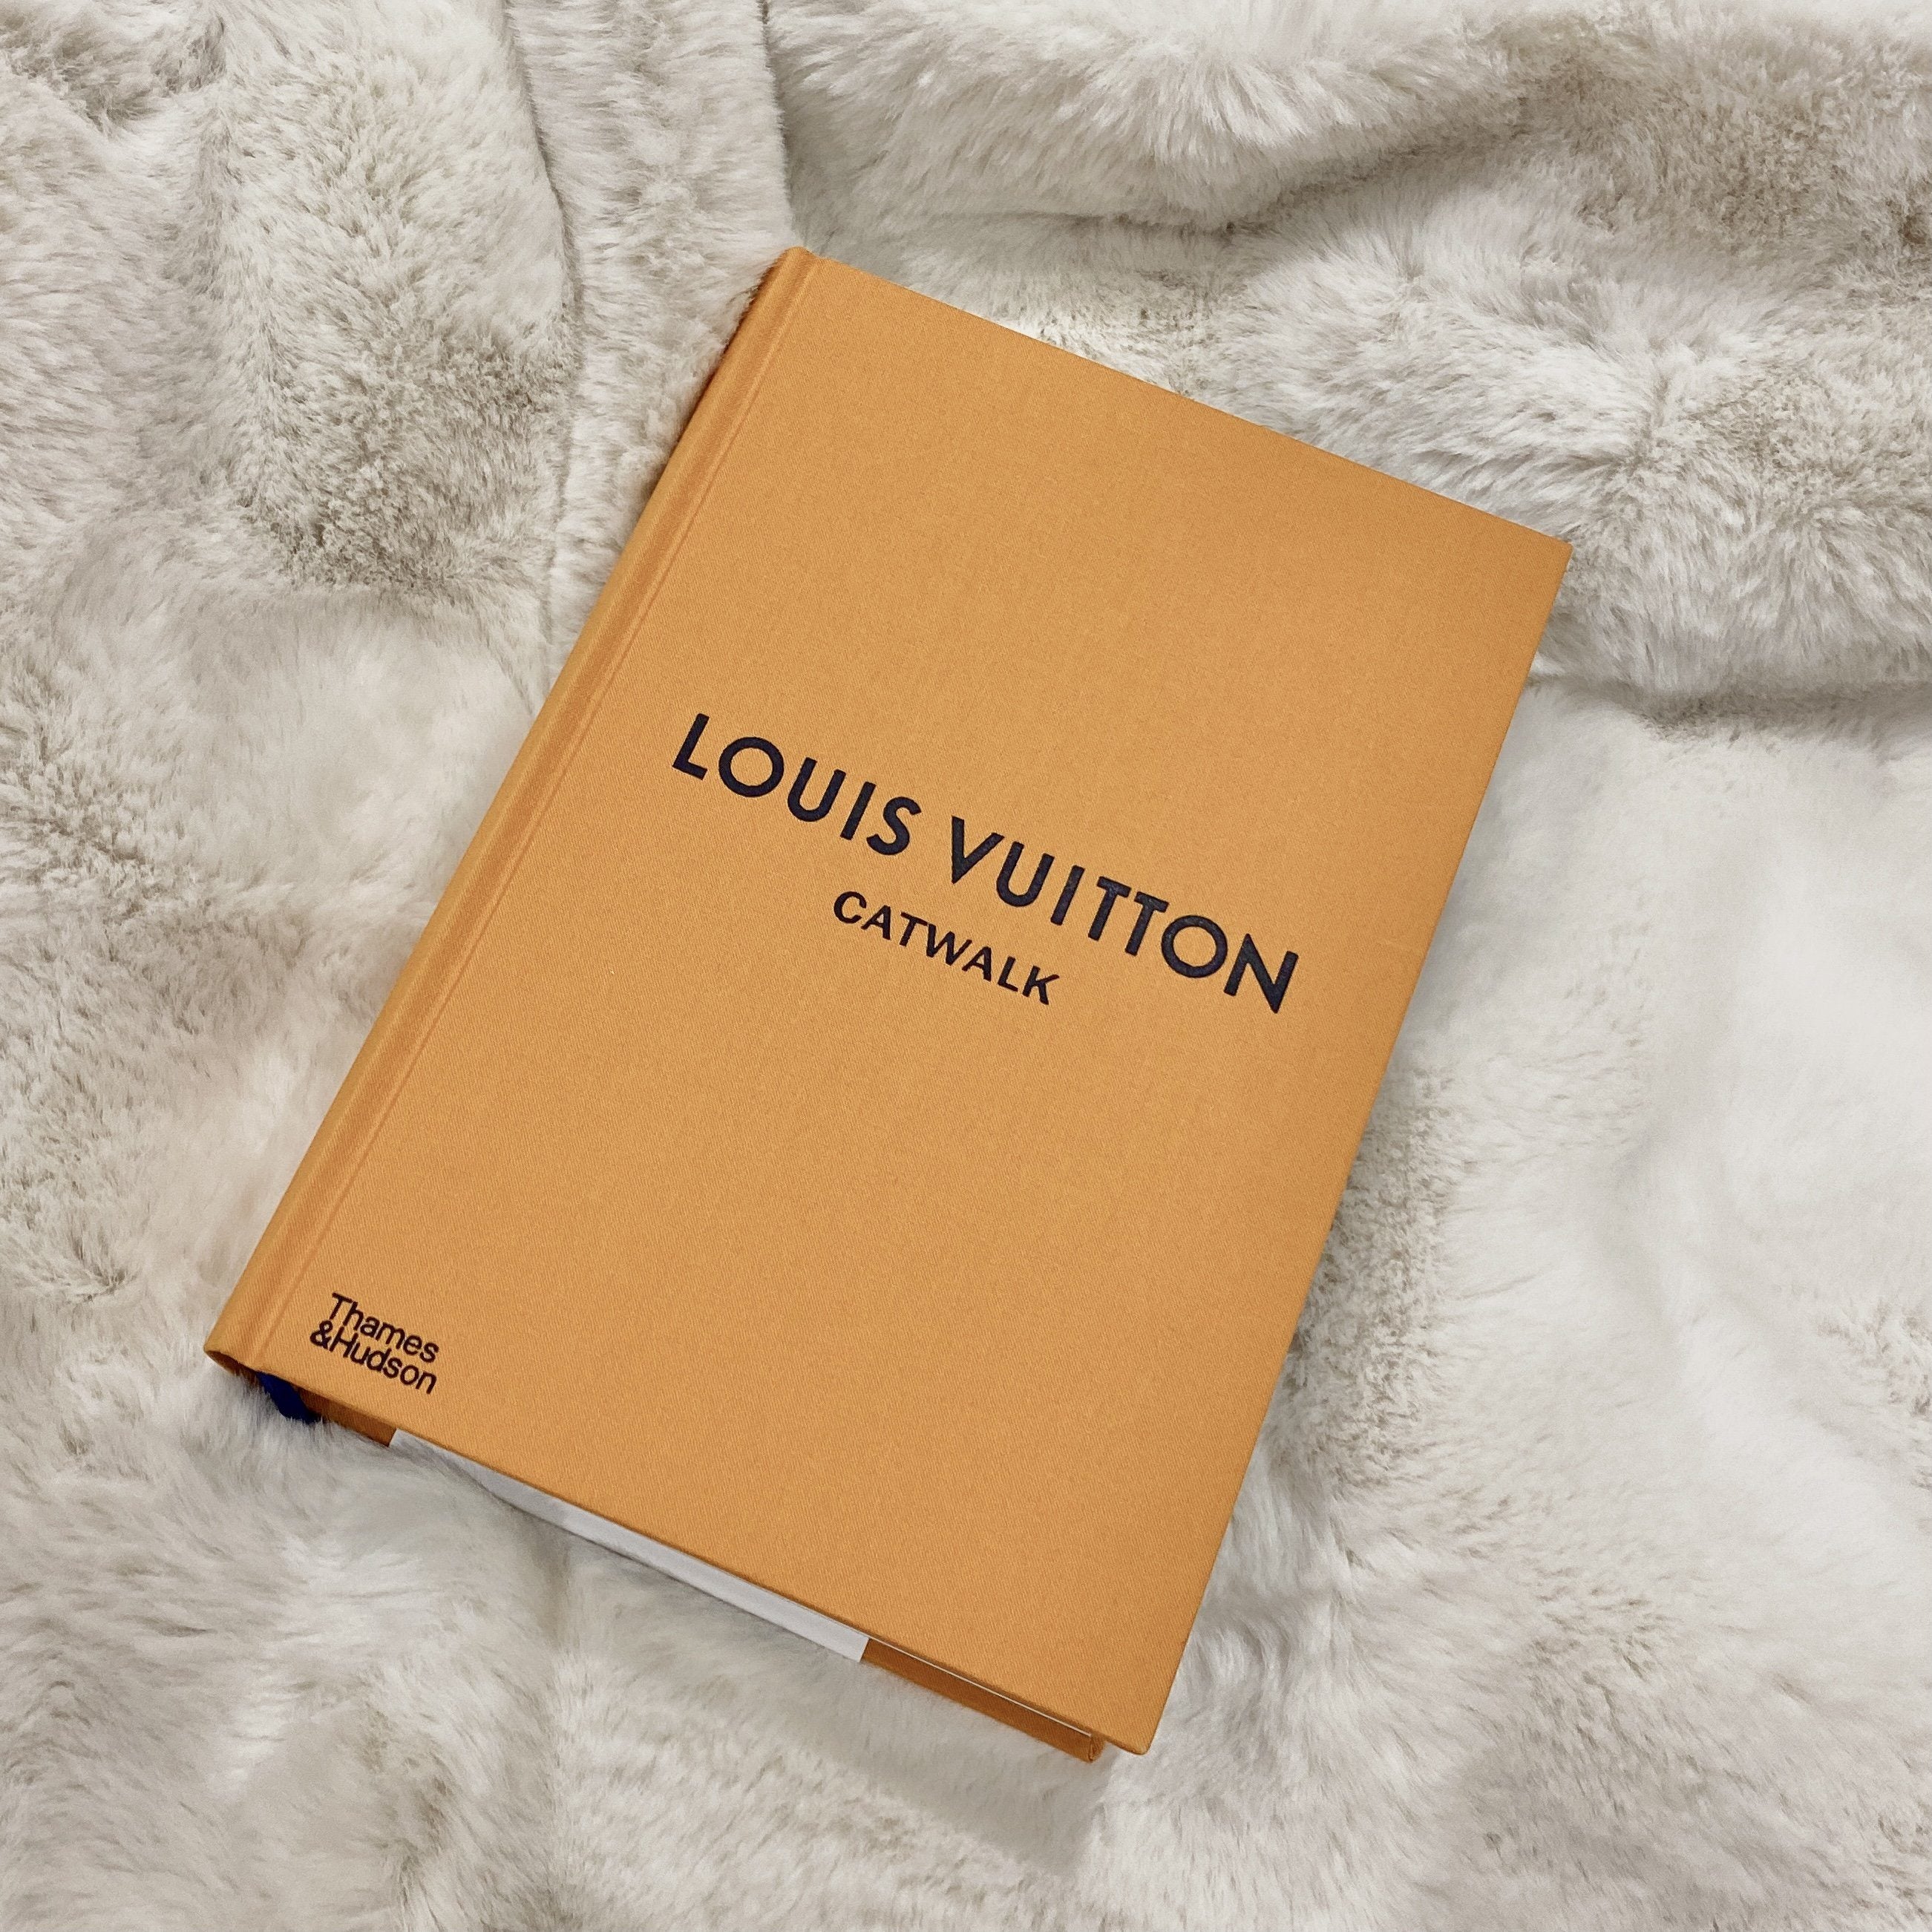 Louis Vuitton Catwalk Hardback Coffee Table Book